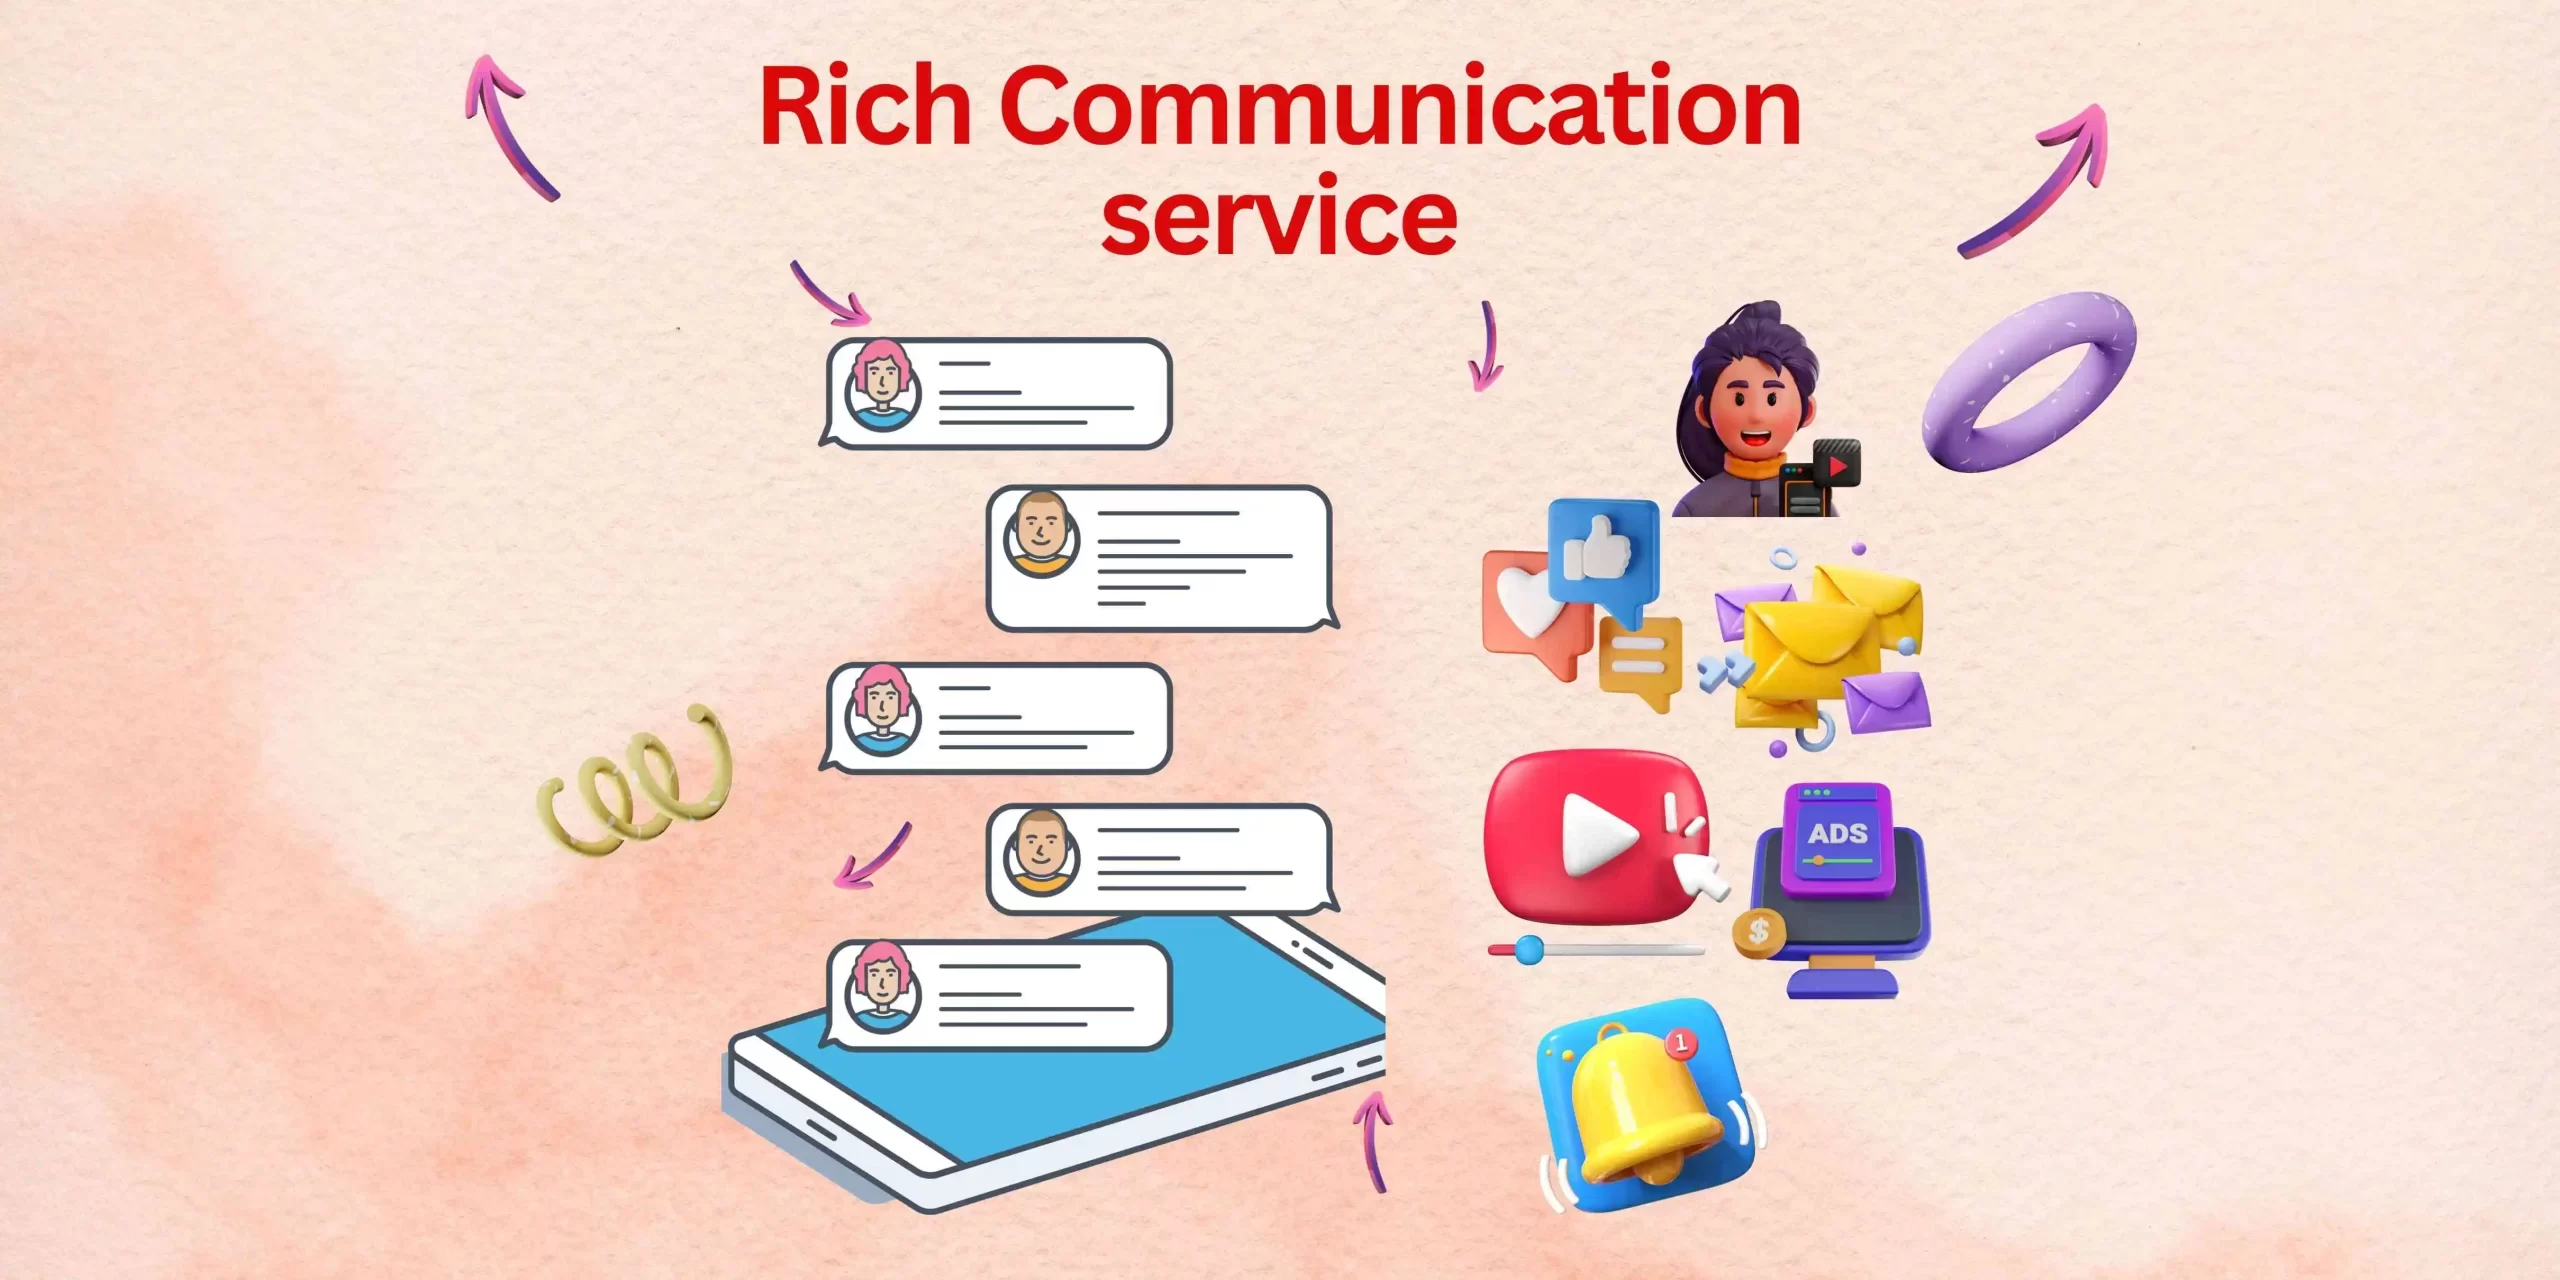 Rich communication service